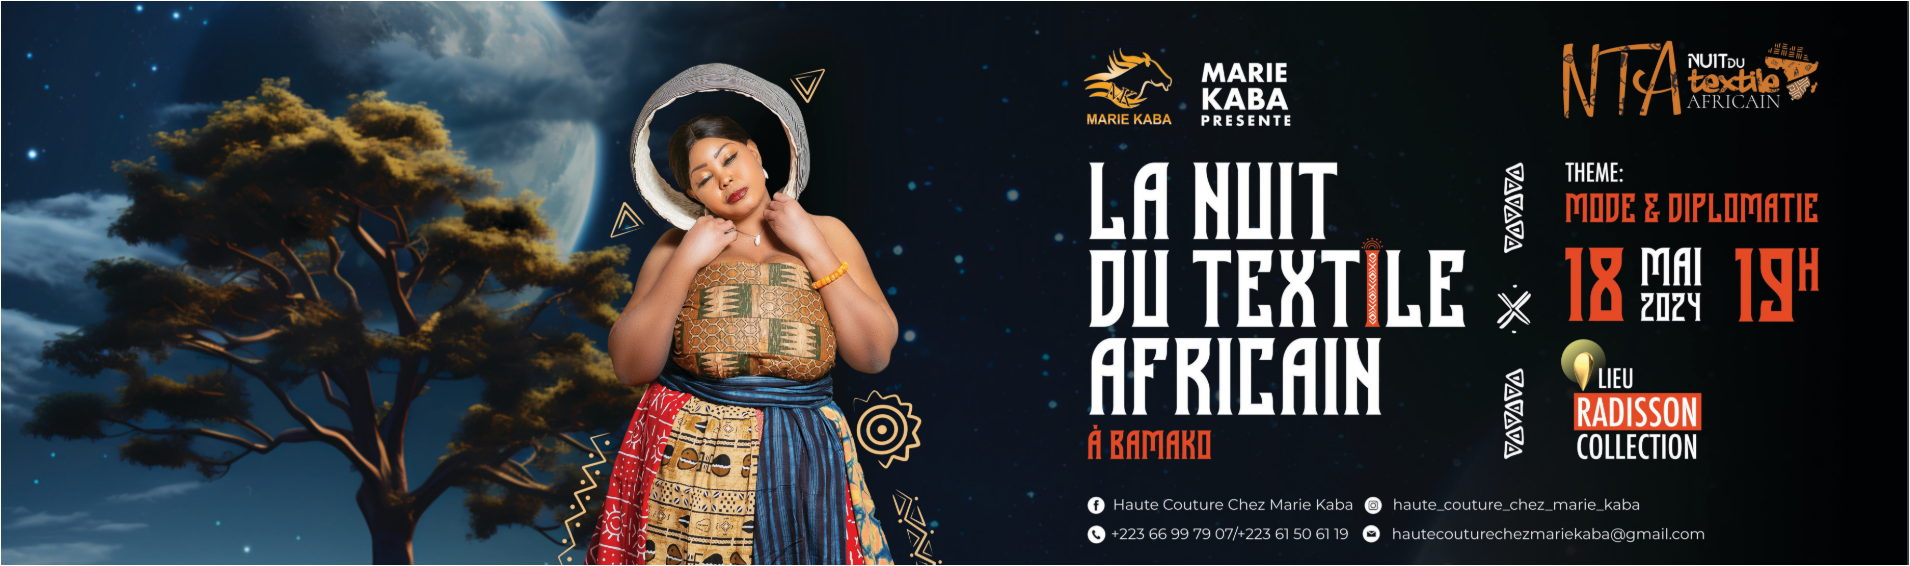 NUIT DU TEXTILE AFRICAIN A BAMAKO BY MARIE KABA